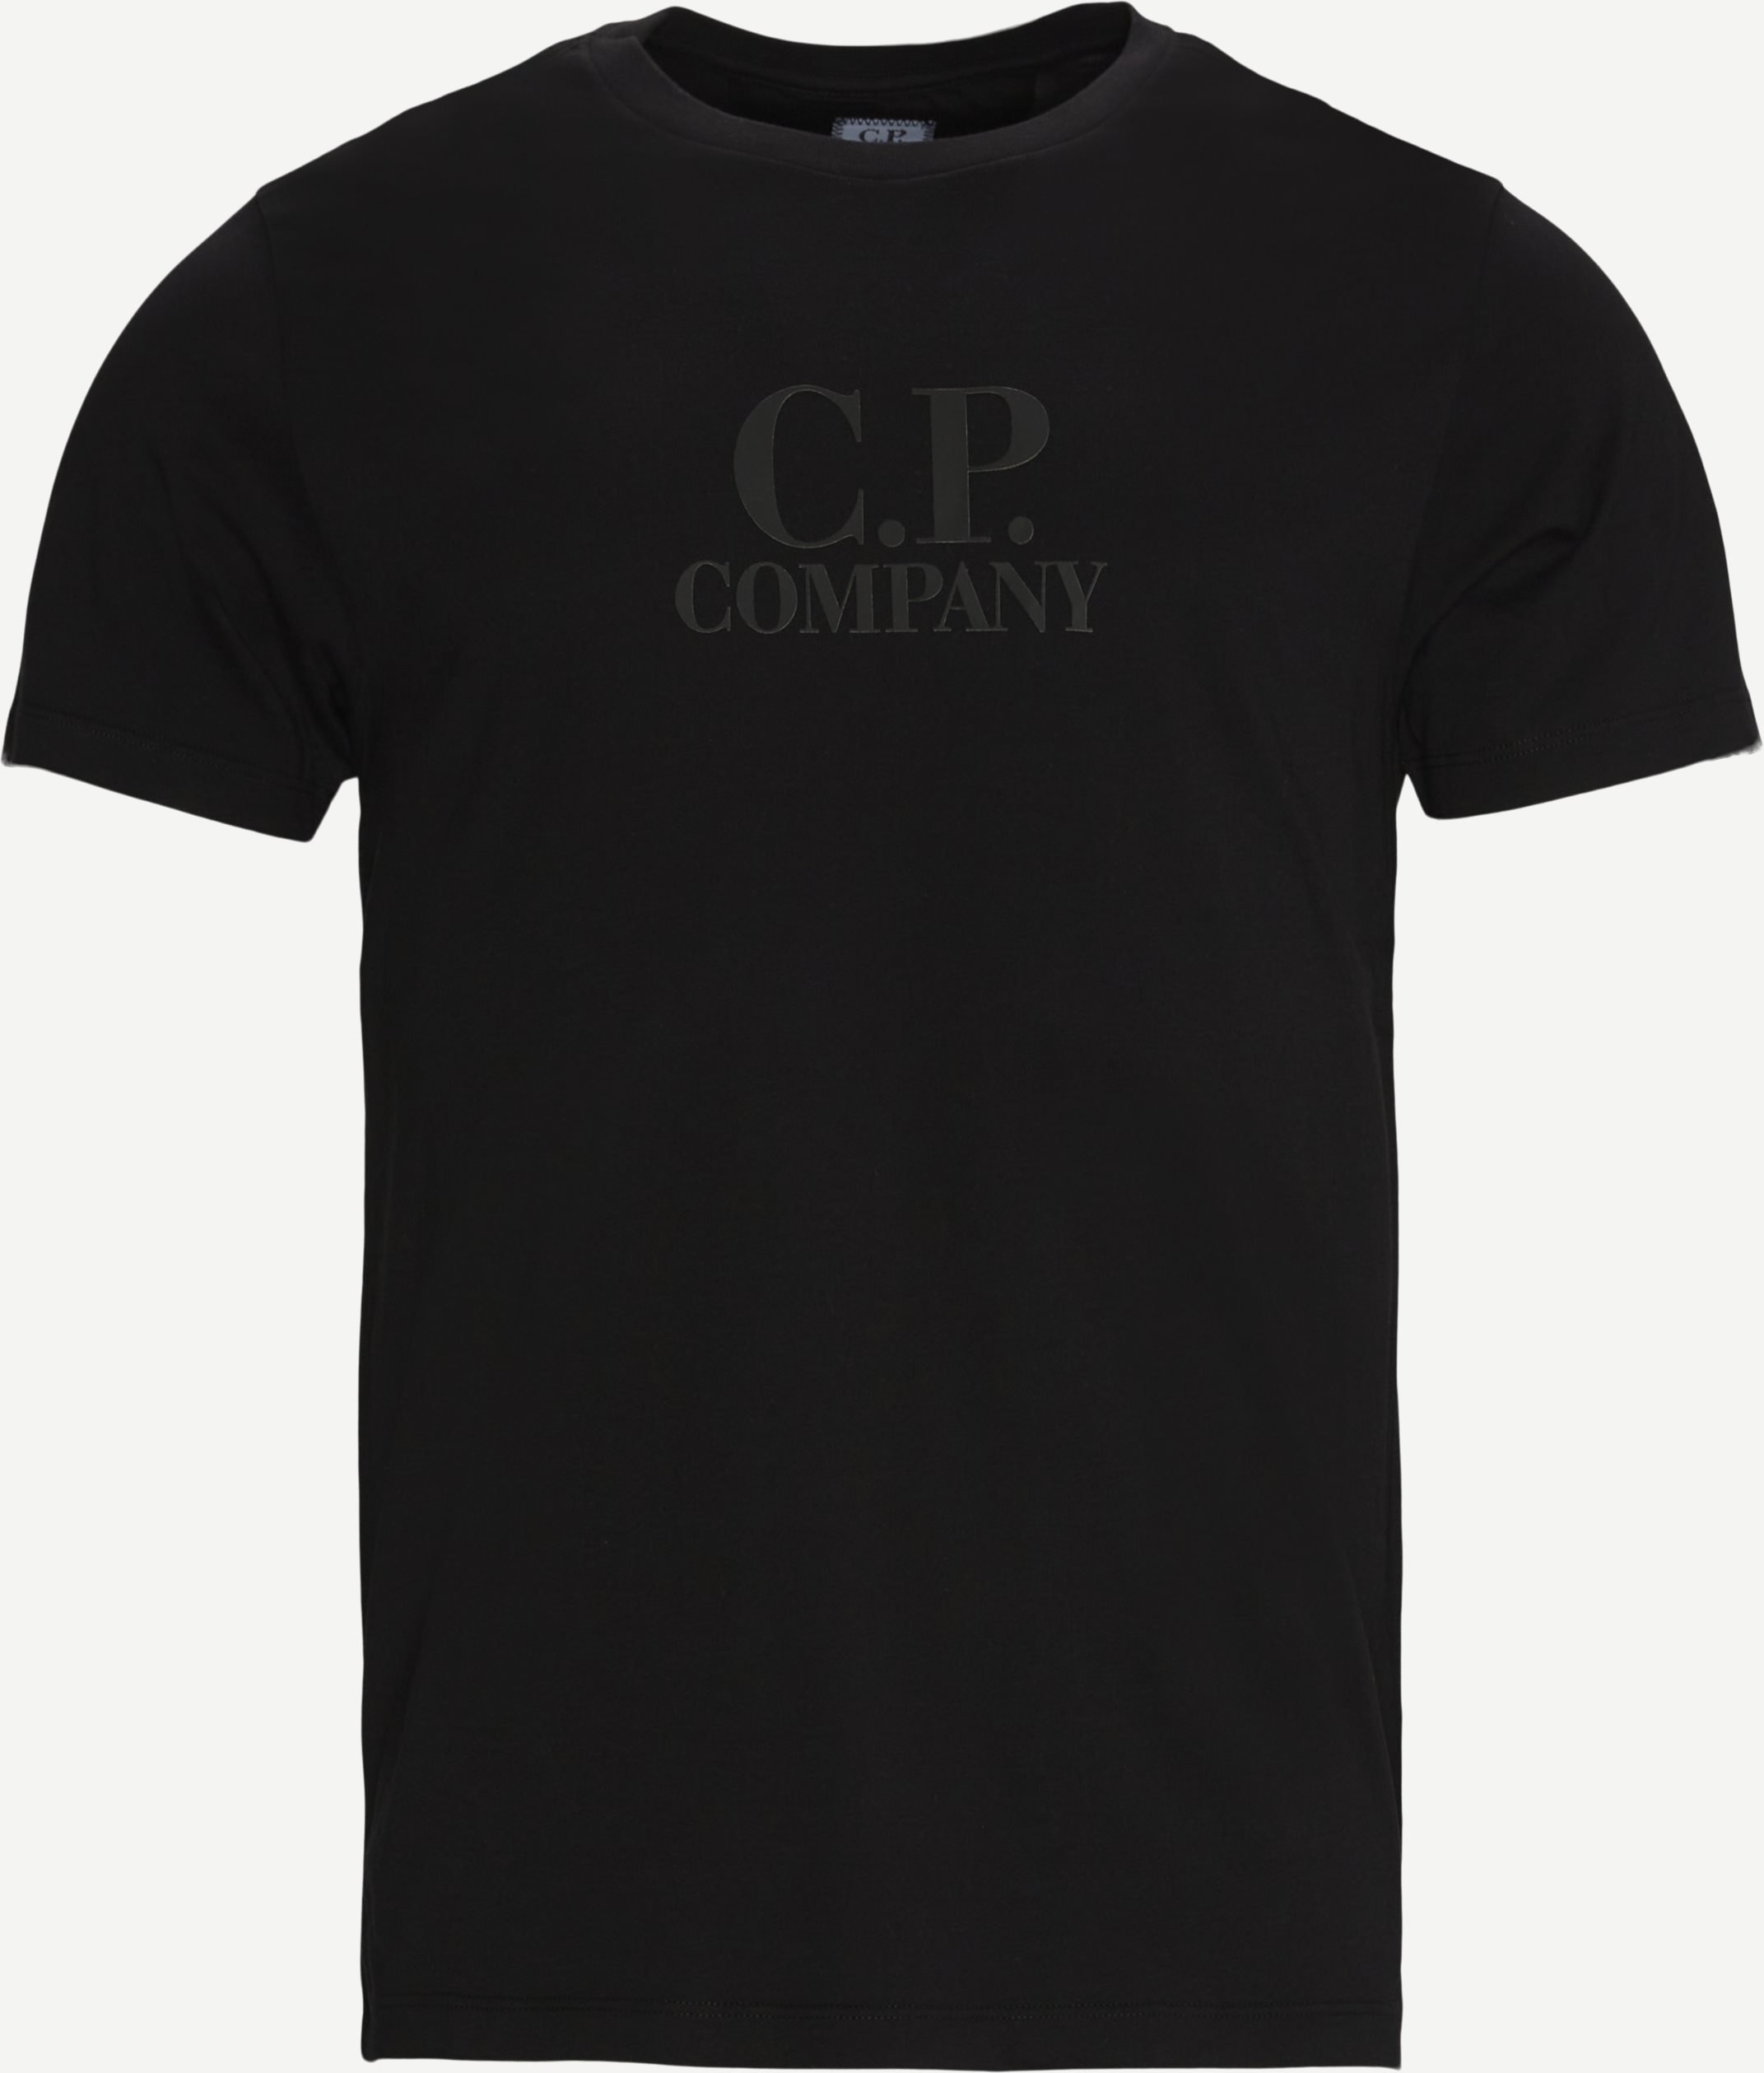 Jersey Tee - T-shirts - Regular fit - Black